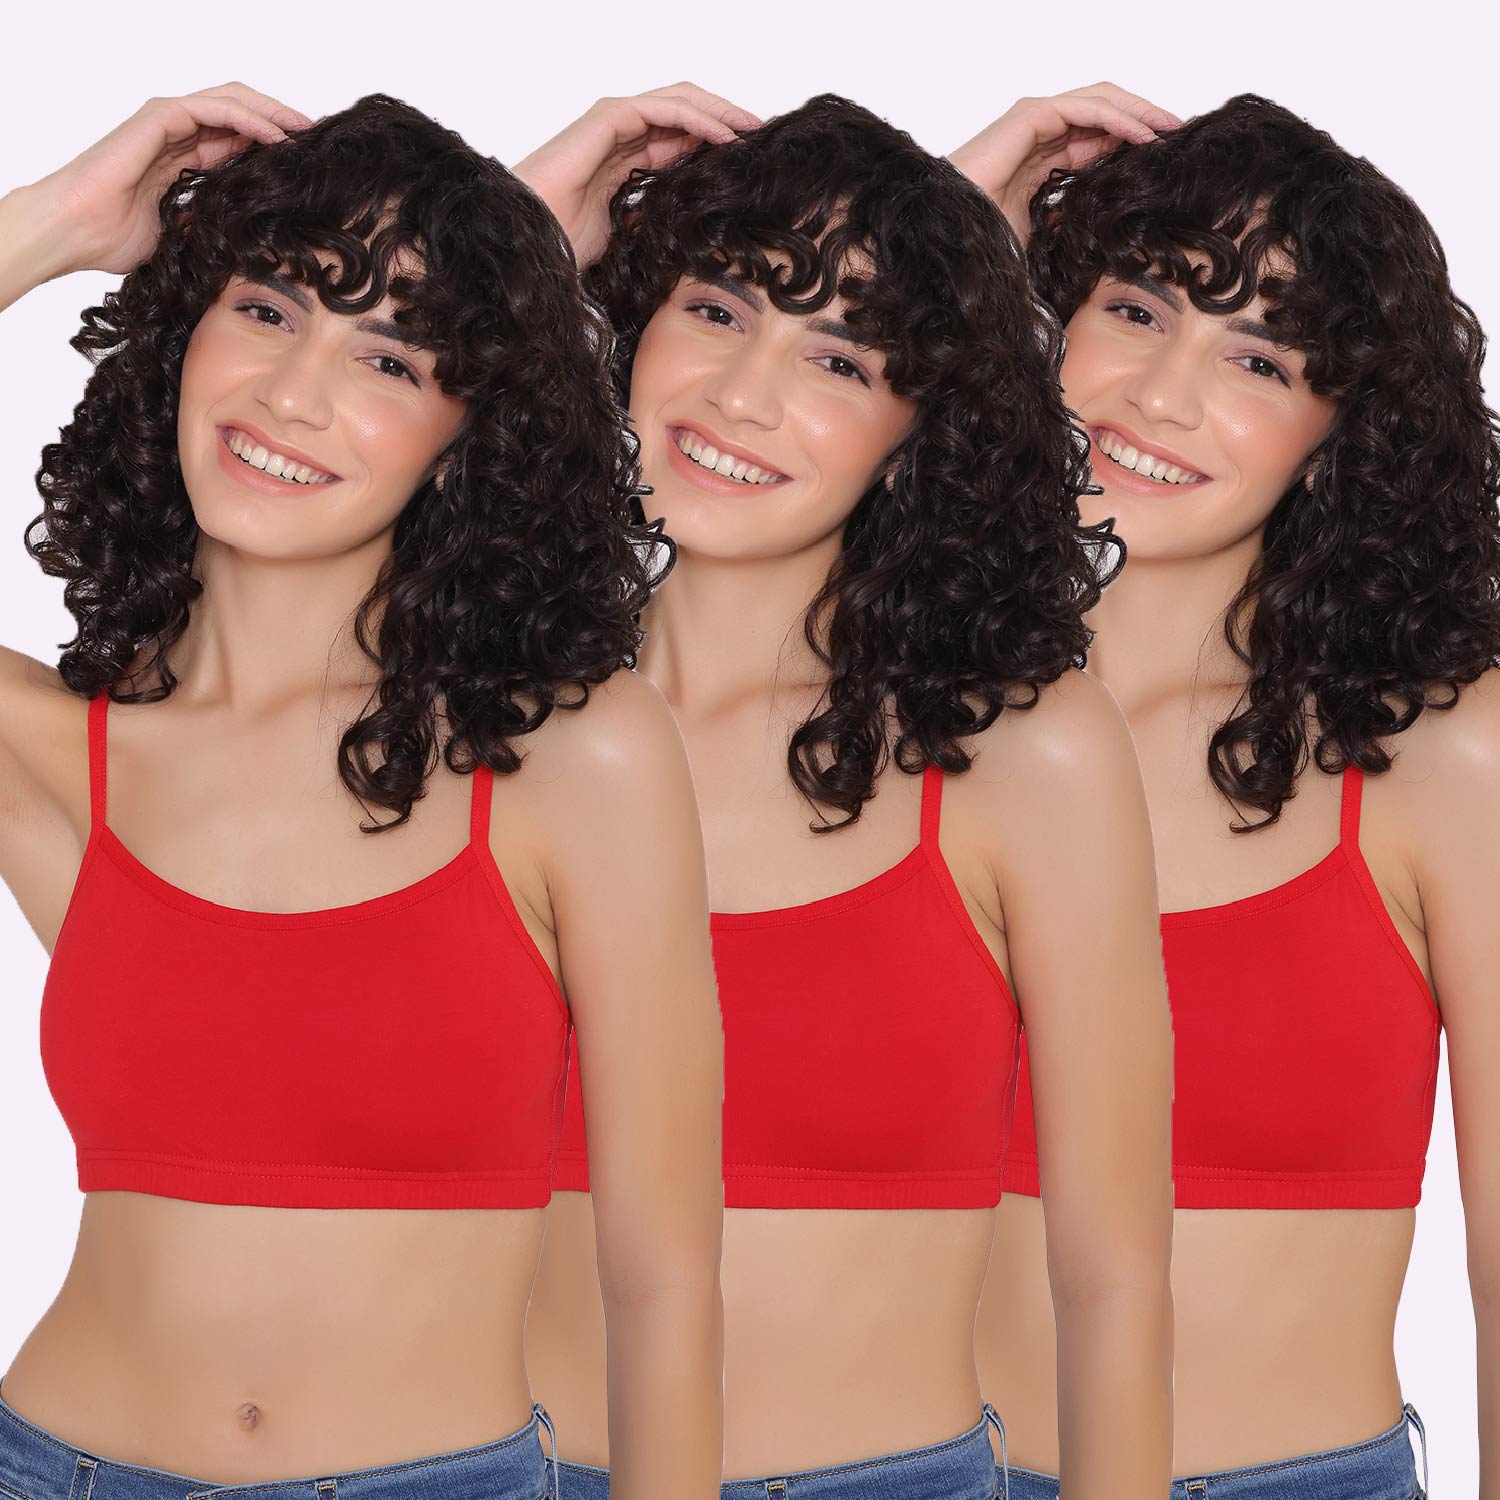 Teenager bra for women's in different sizes and colors, Inkurv – INKURV